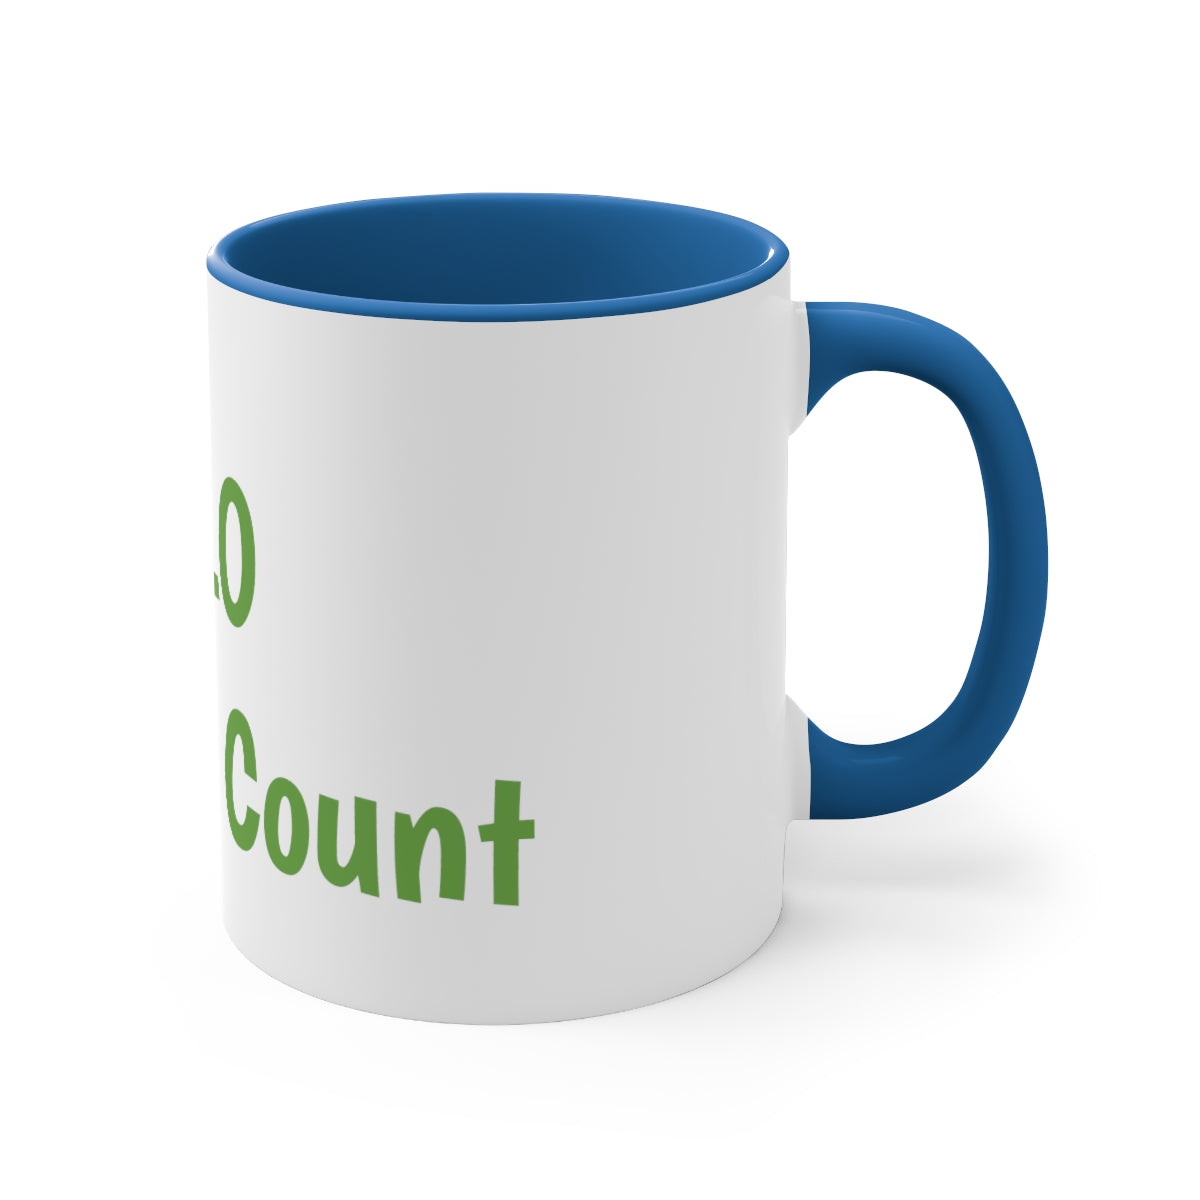 11 oz Mug - YOLO Make it Count - Accent Coffee Mug